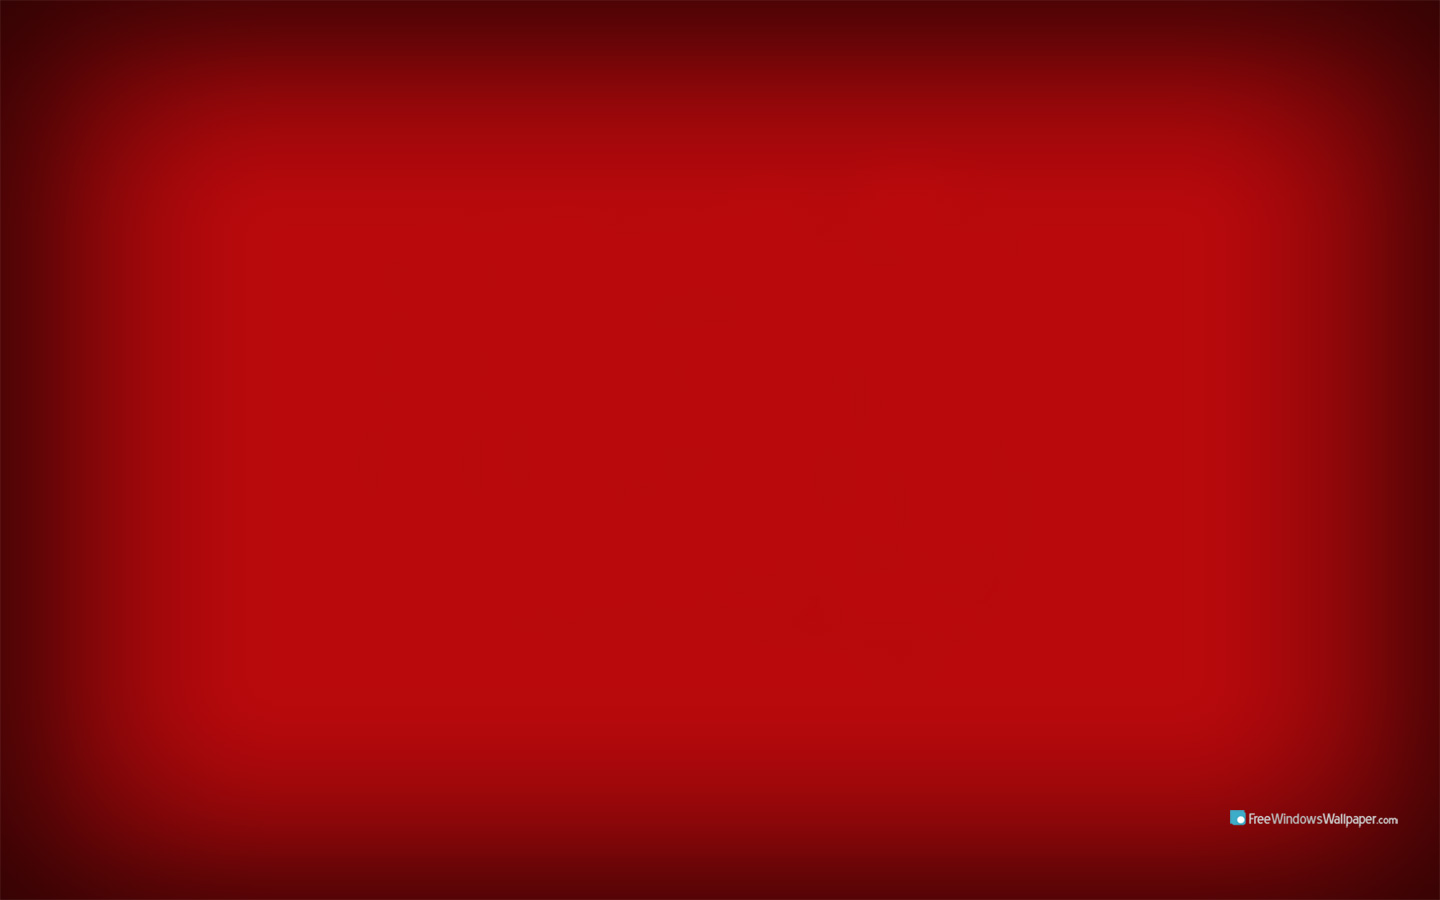 Free Download Windows 1440x900 Red Wallpaper Red Desktop Wallpaper 1440x900 For Your Desktop Mobile Tablet Explore 74 Free Red Wallpaper Cool Red Wallpaper Red Background Wallpaper Red Wallpaper Images - cool red wallpaper roblox